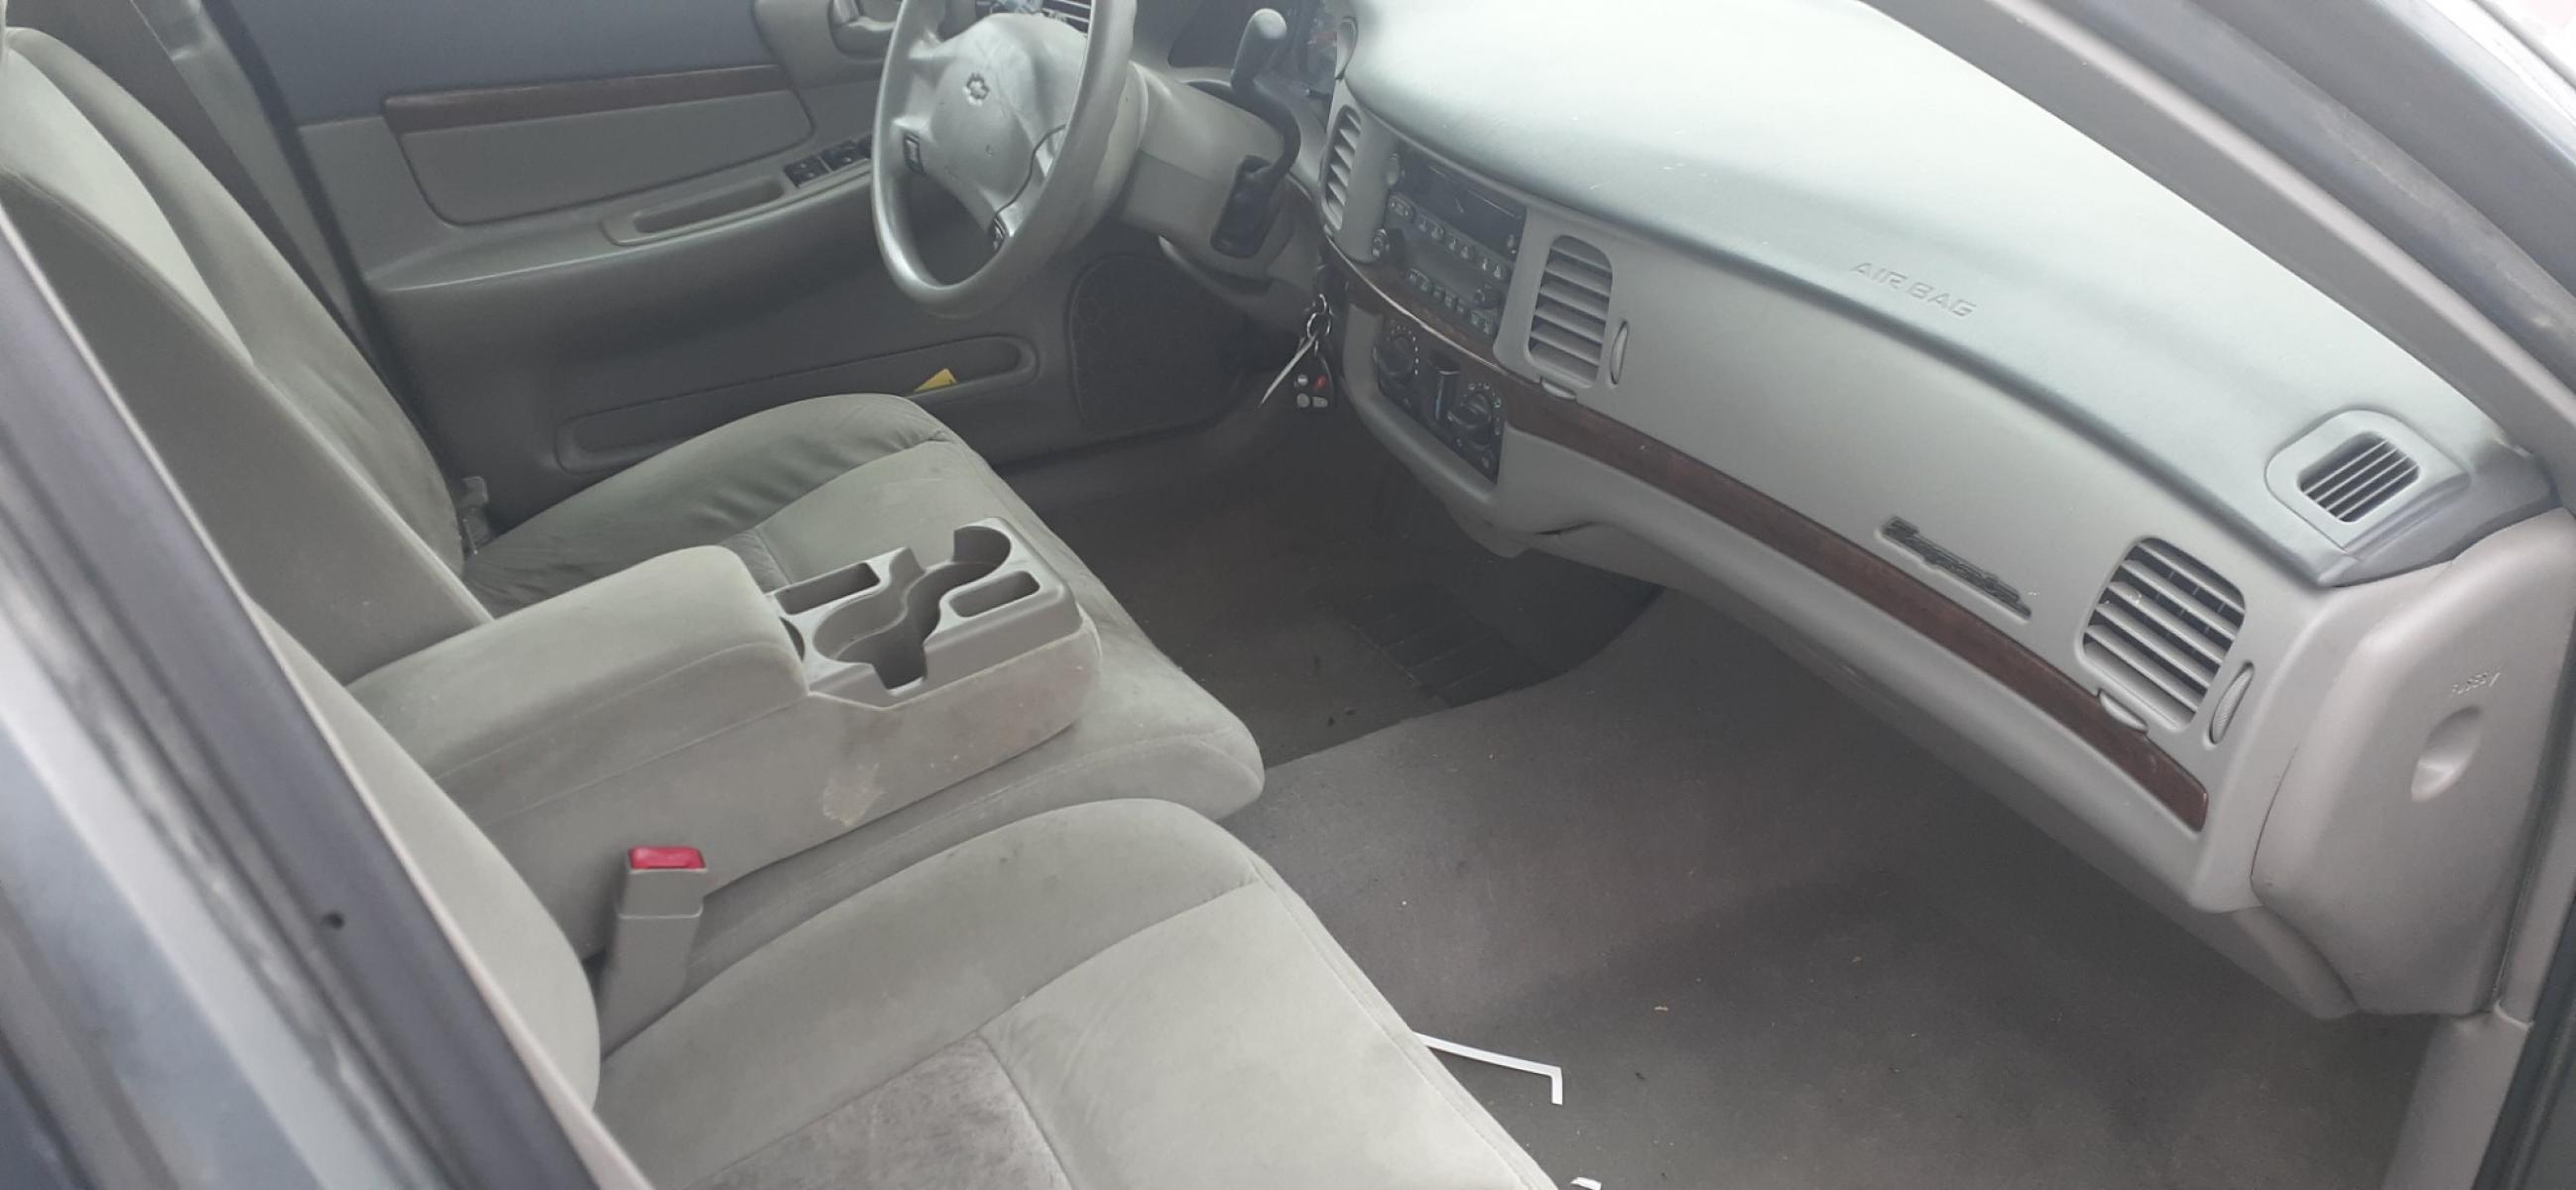 2005 Chevrolet Impala (2G1WF52E959) , located at 2015 Cambell Street, Rapid City, SD, 57701, (605) 342-8326, 44.066433, -103.191772 - Photo #5